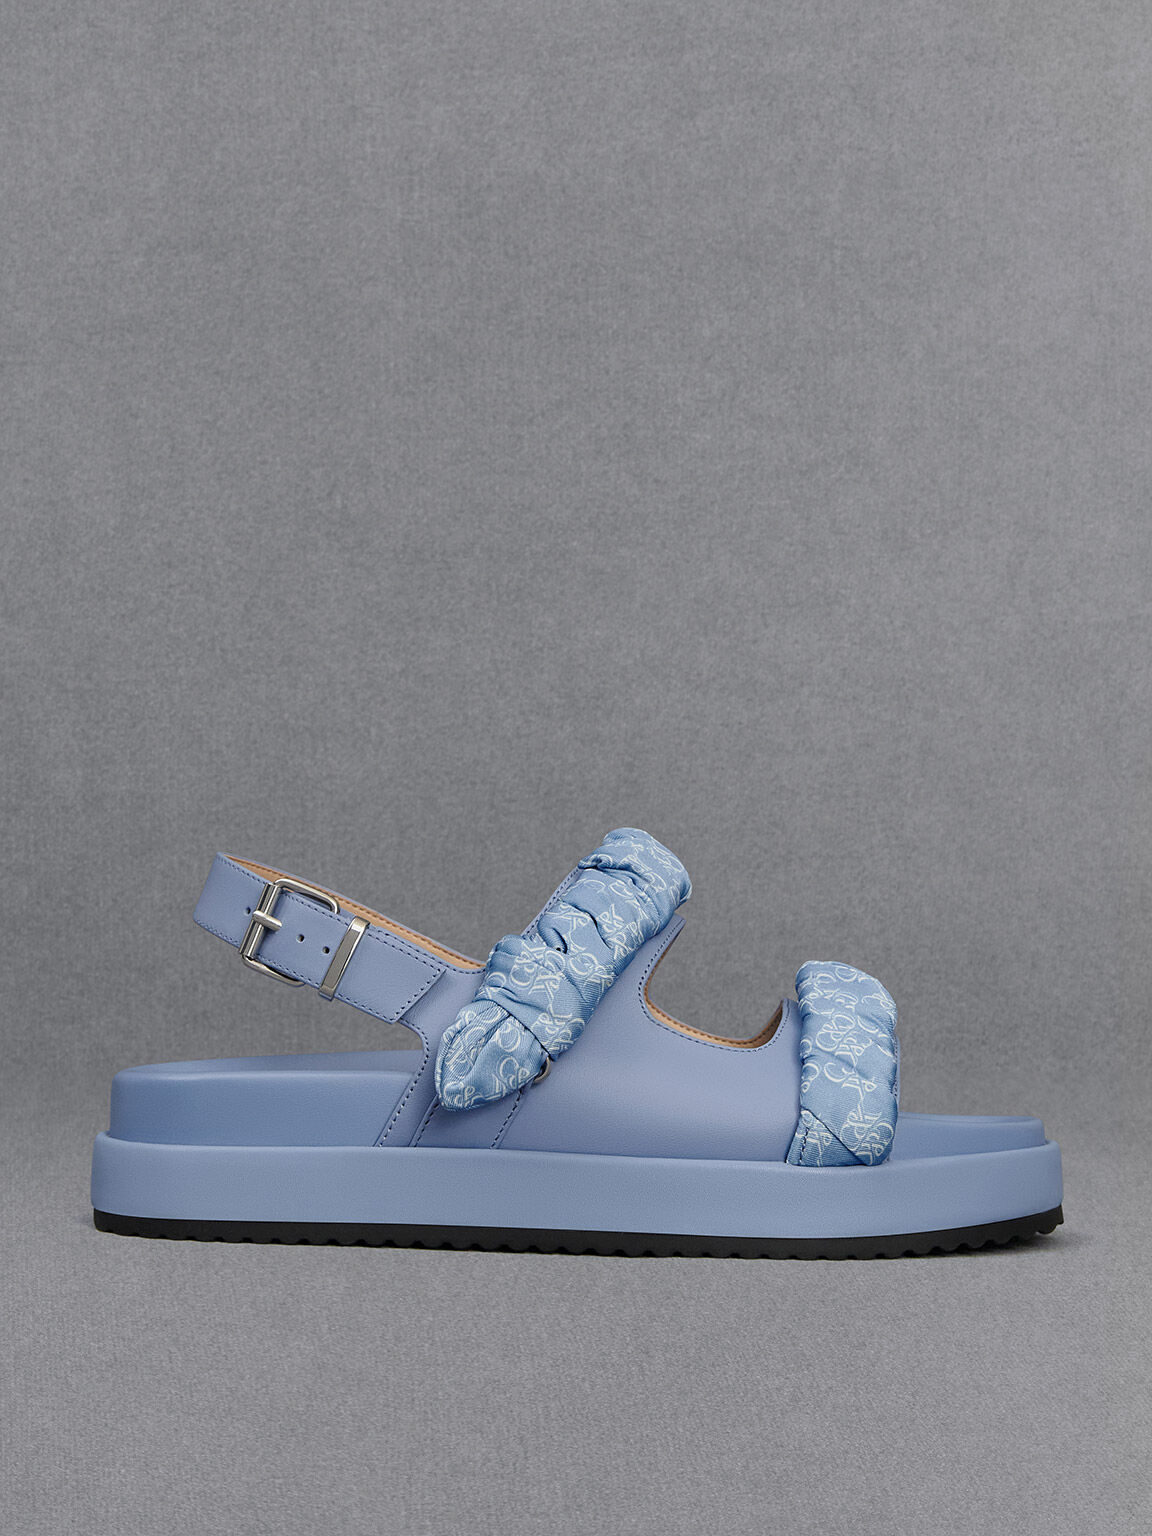 Zign LEATHER - High heeled sandals - light blue - Zalando.de